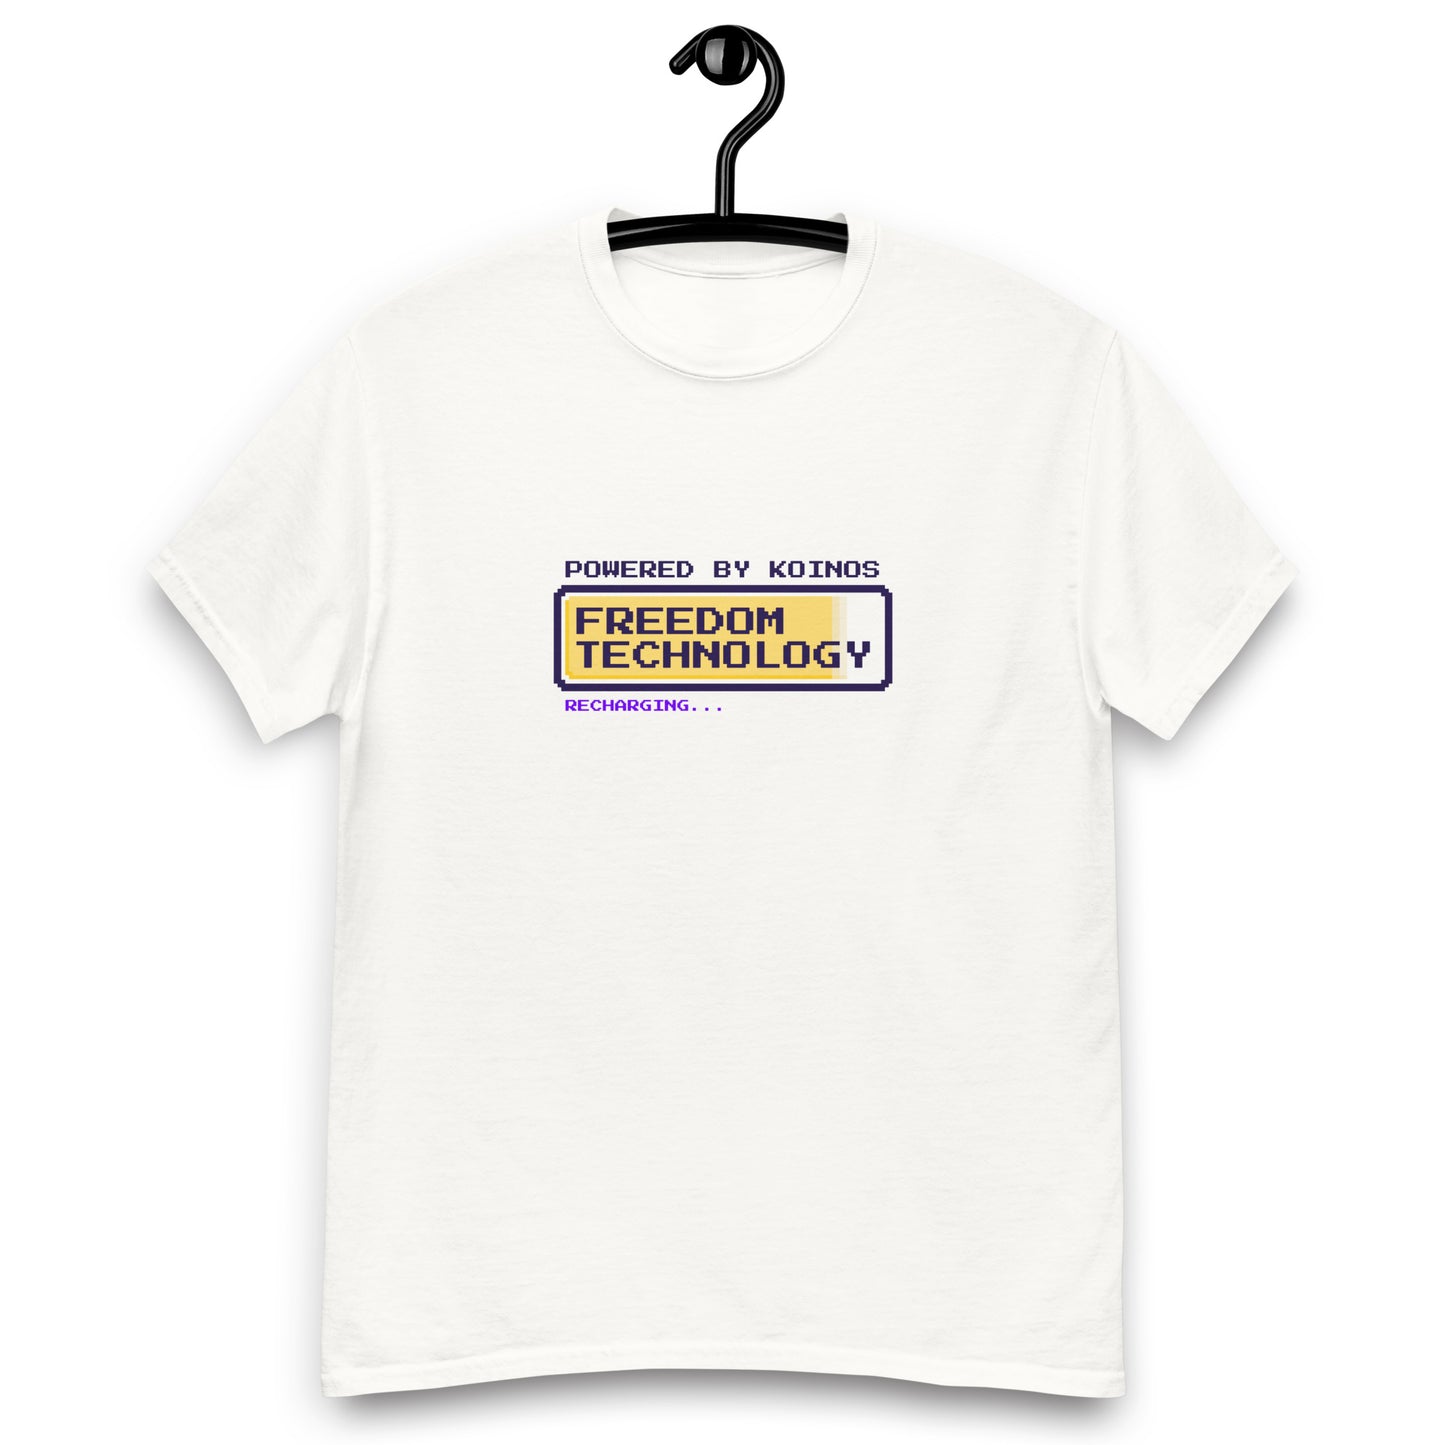 Koinos Freedom Technology Shirt